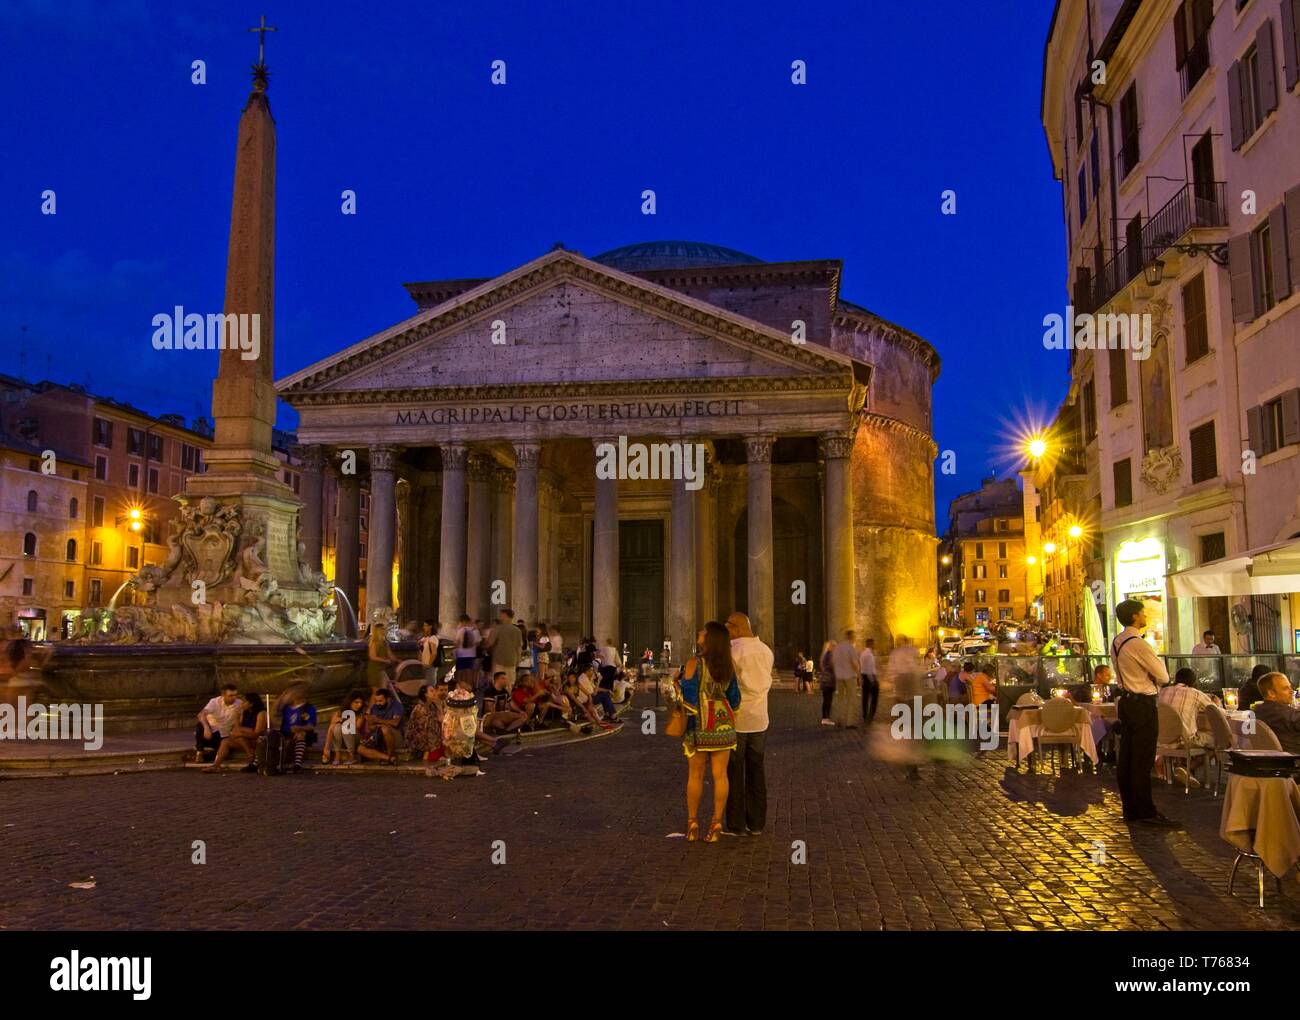 Rome at night - the Pantheon and the vibrant nightlife of Piazza della Rotonda and Fontana del Pantheon Stock Photo